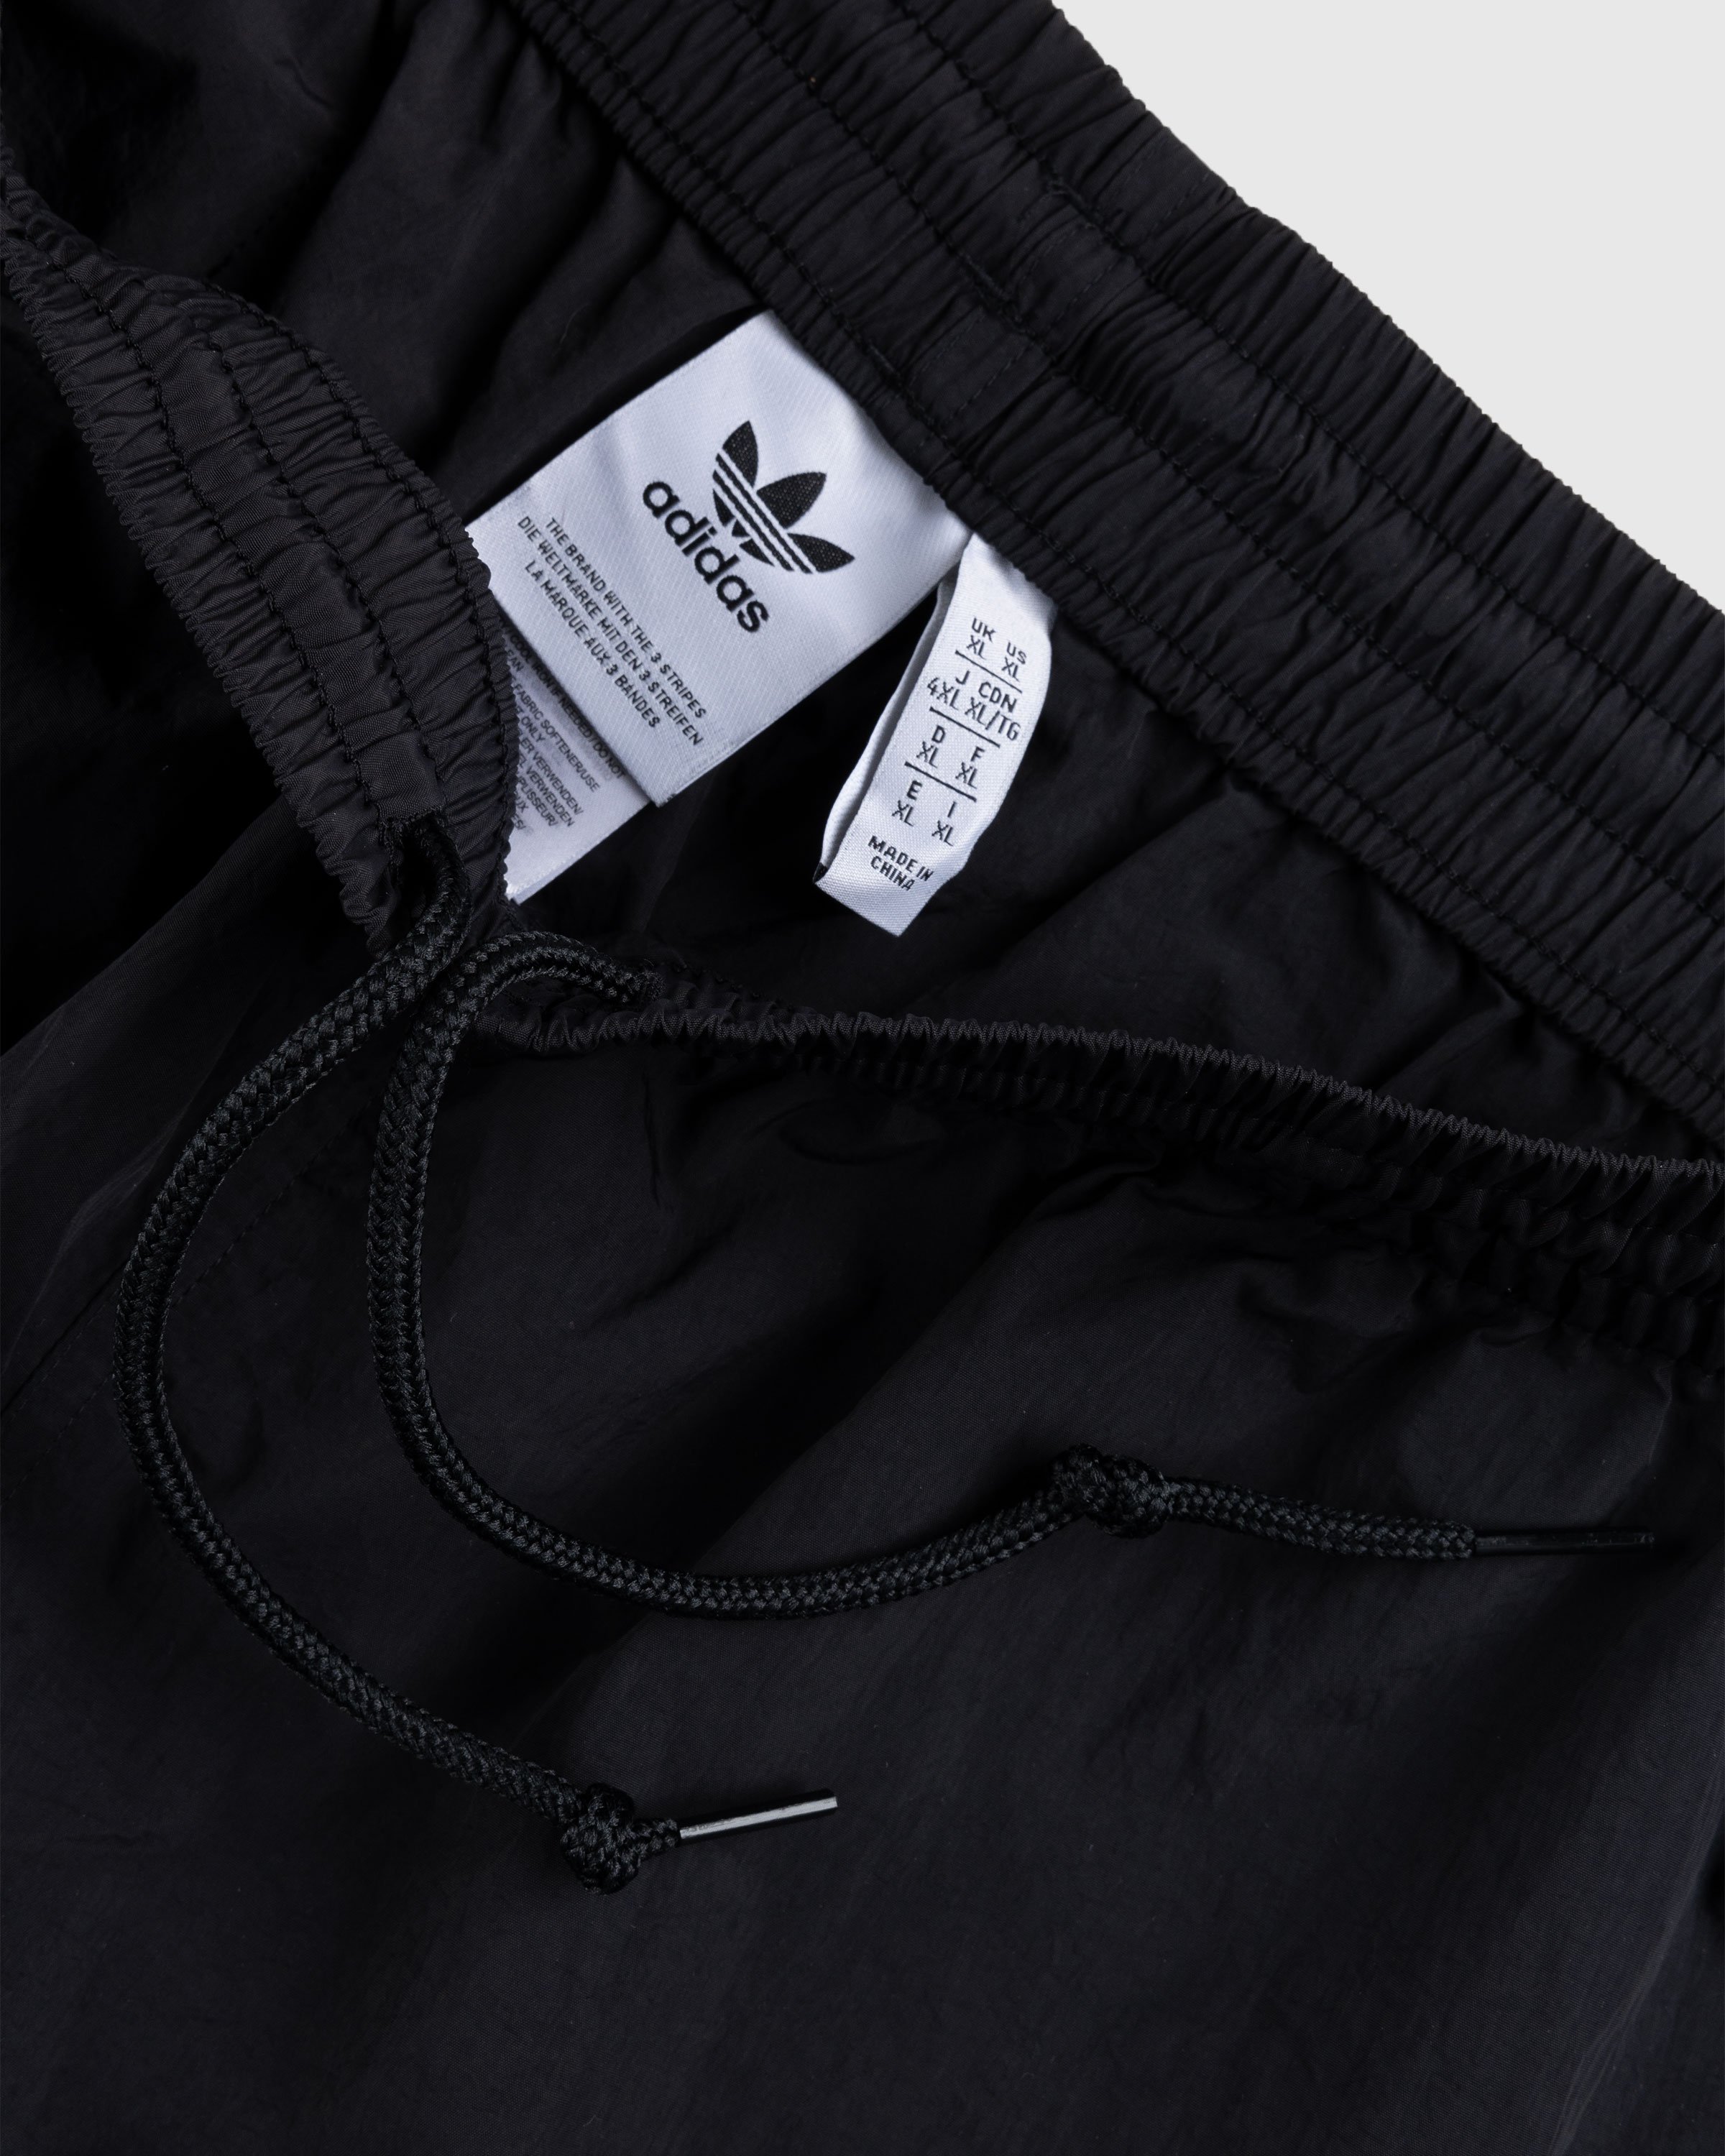 Adidas - SPRINTER SHORTS BLACK - Clothing - Black - Image 7